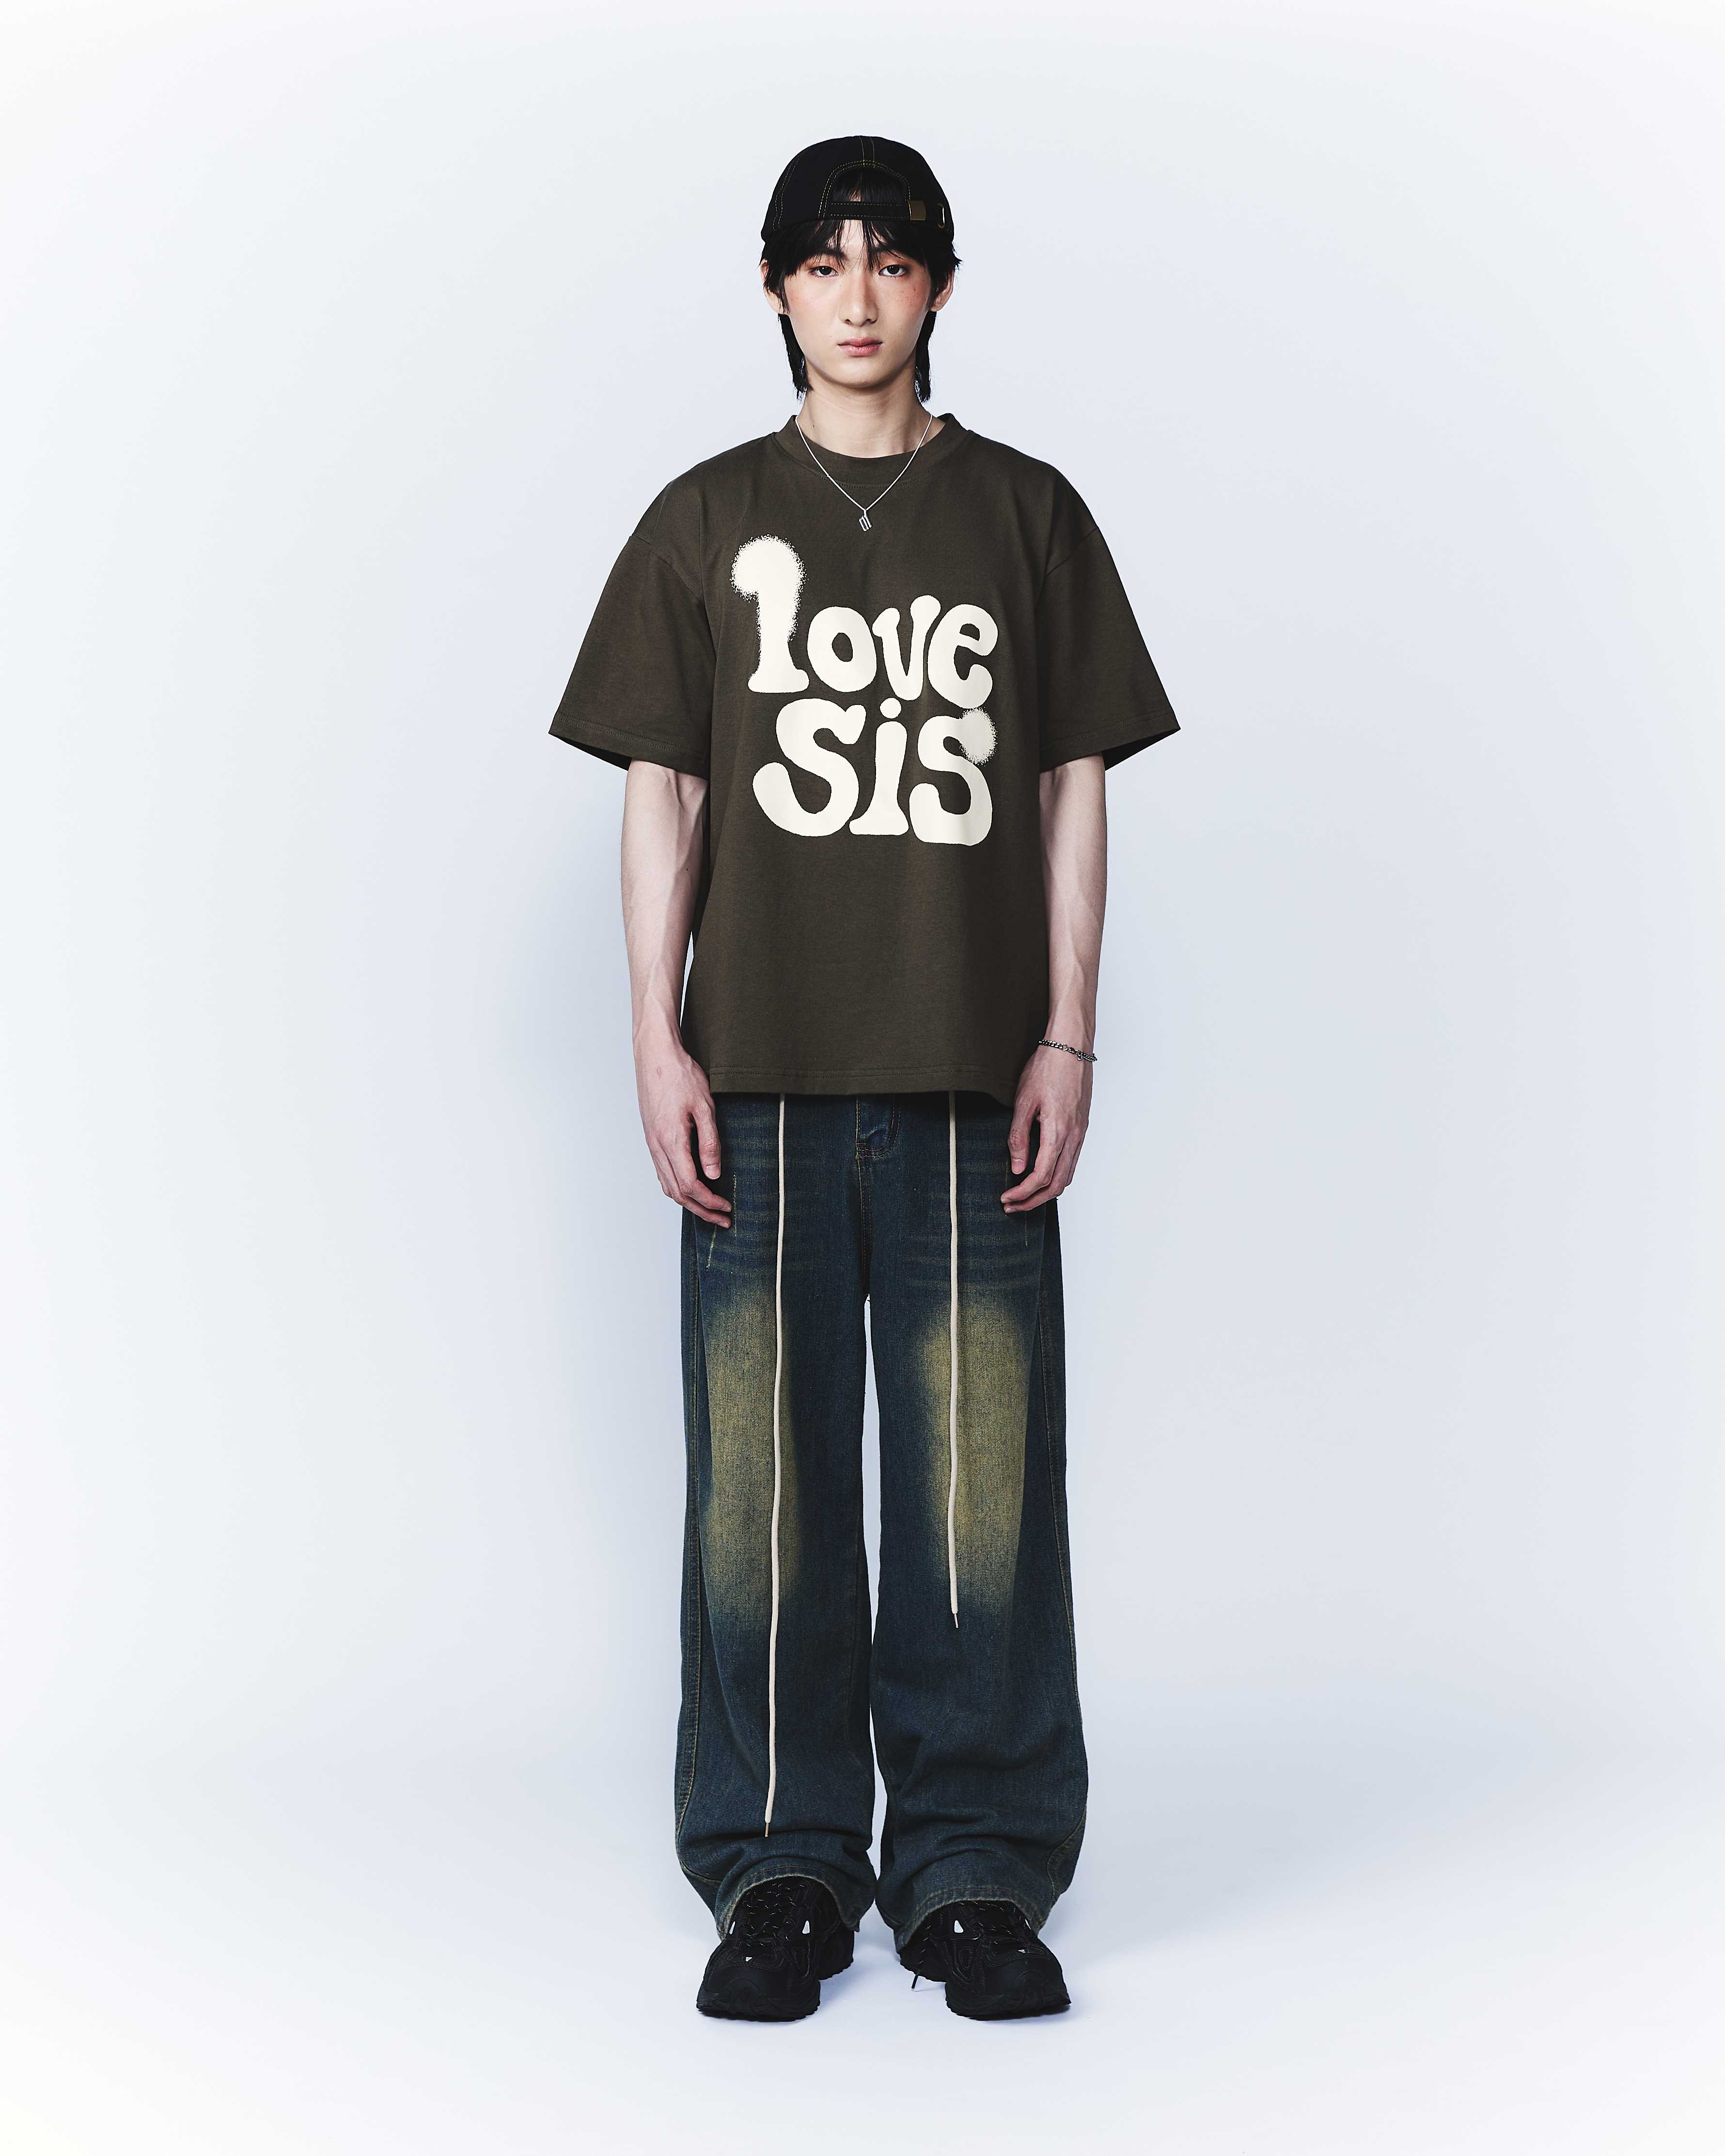 'Love sis' T-shirt